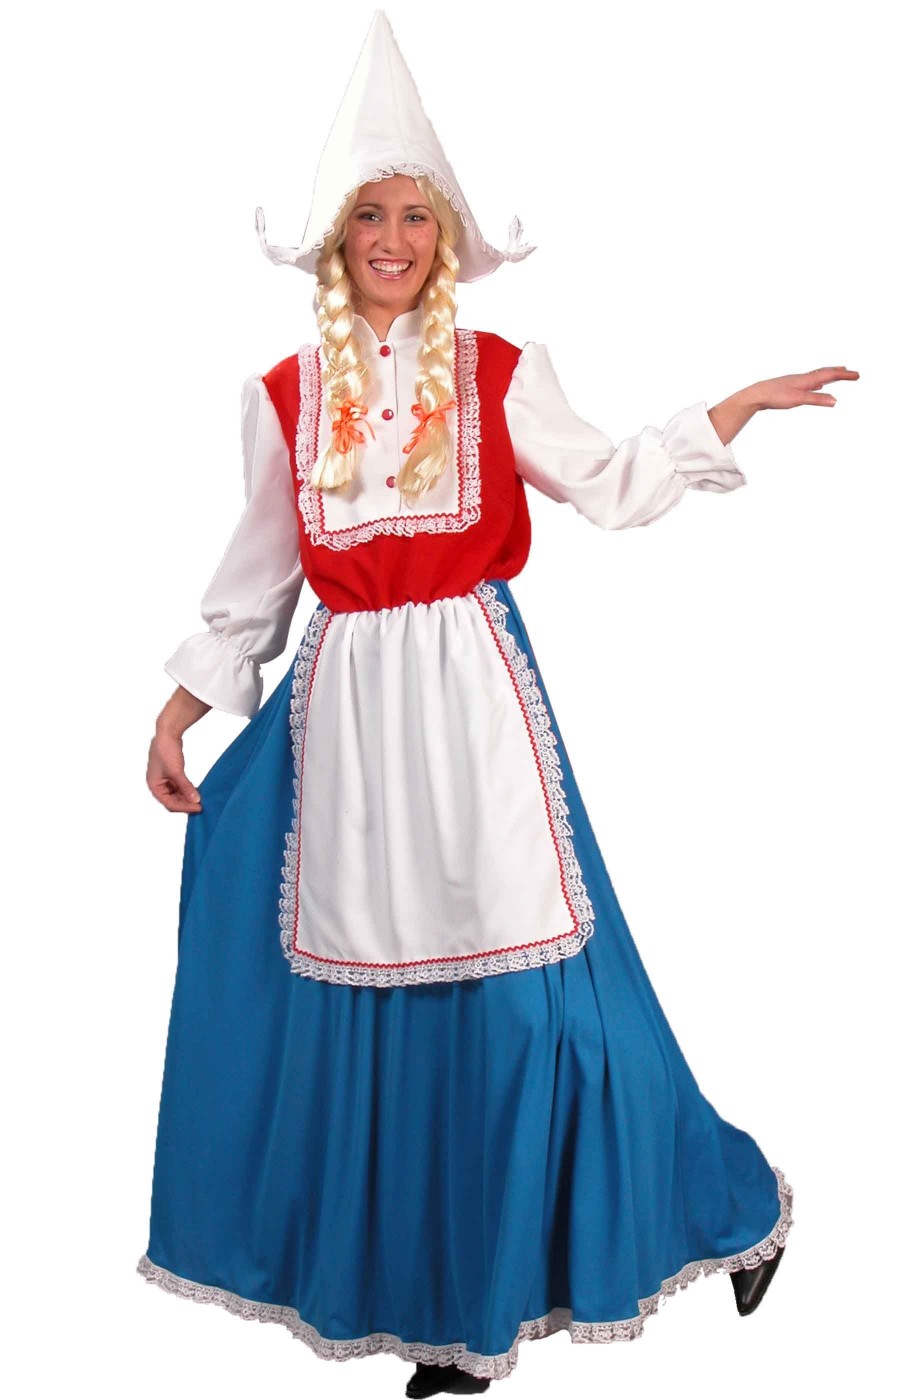 Costume donna olandesina adulta 